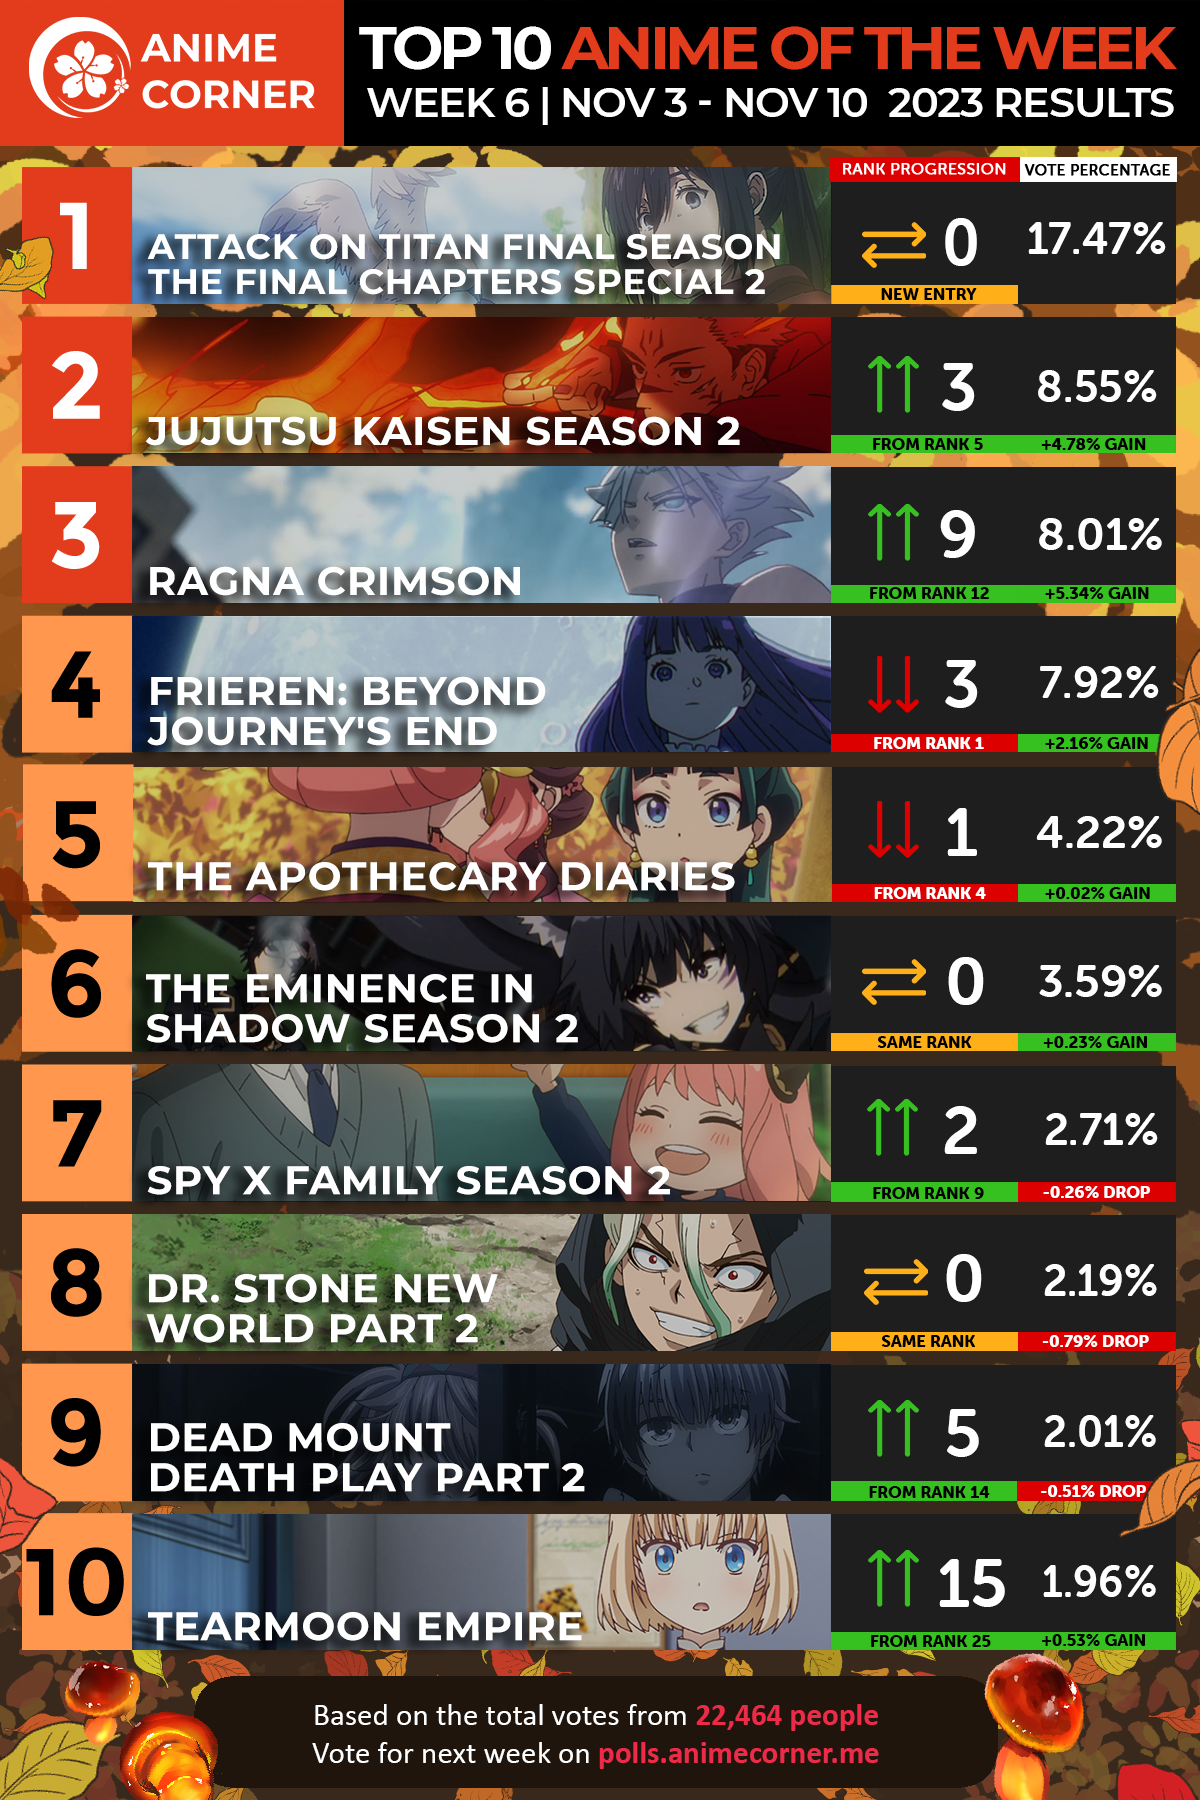 attack on titan tops anime ranking week 6